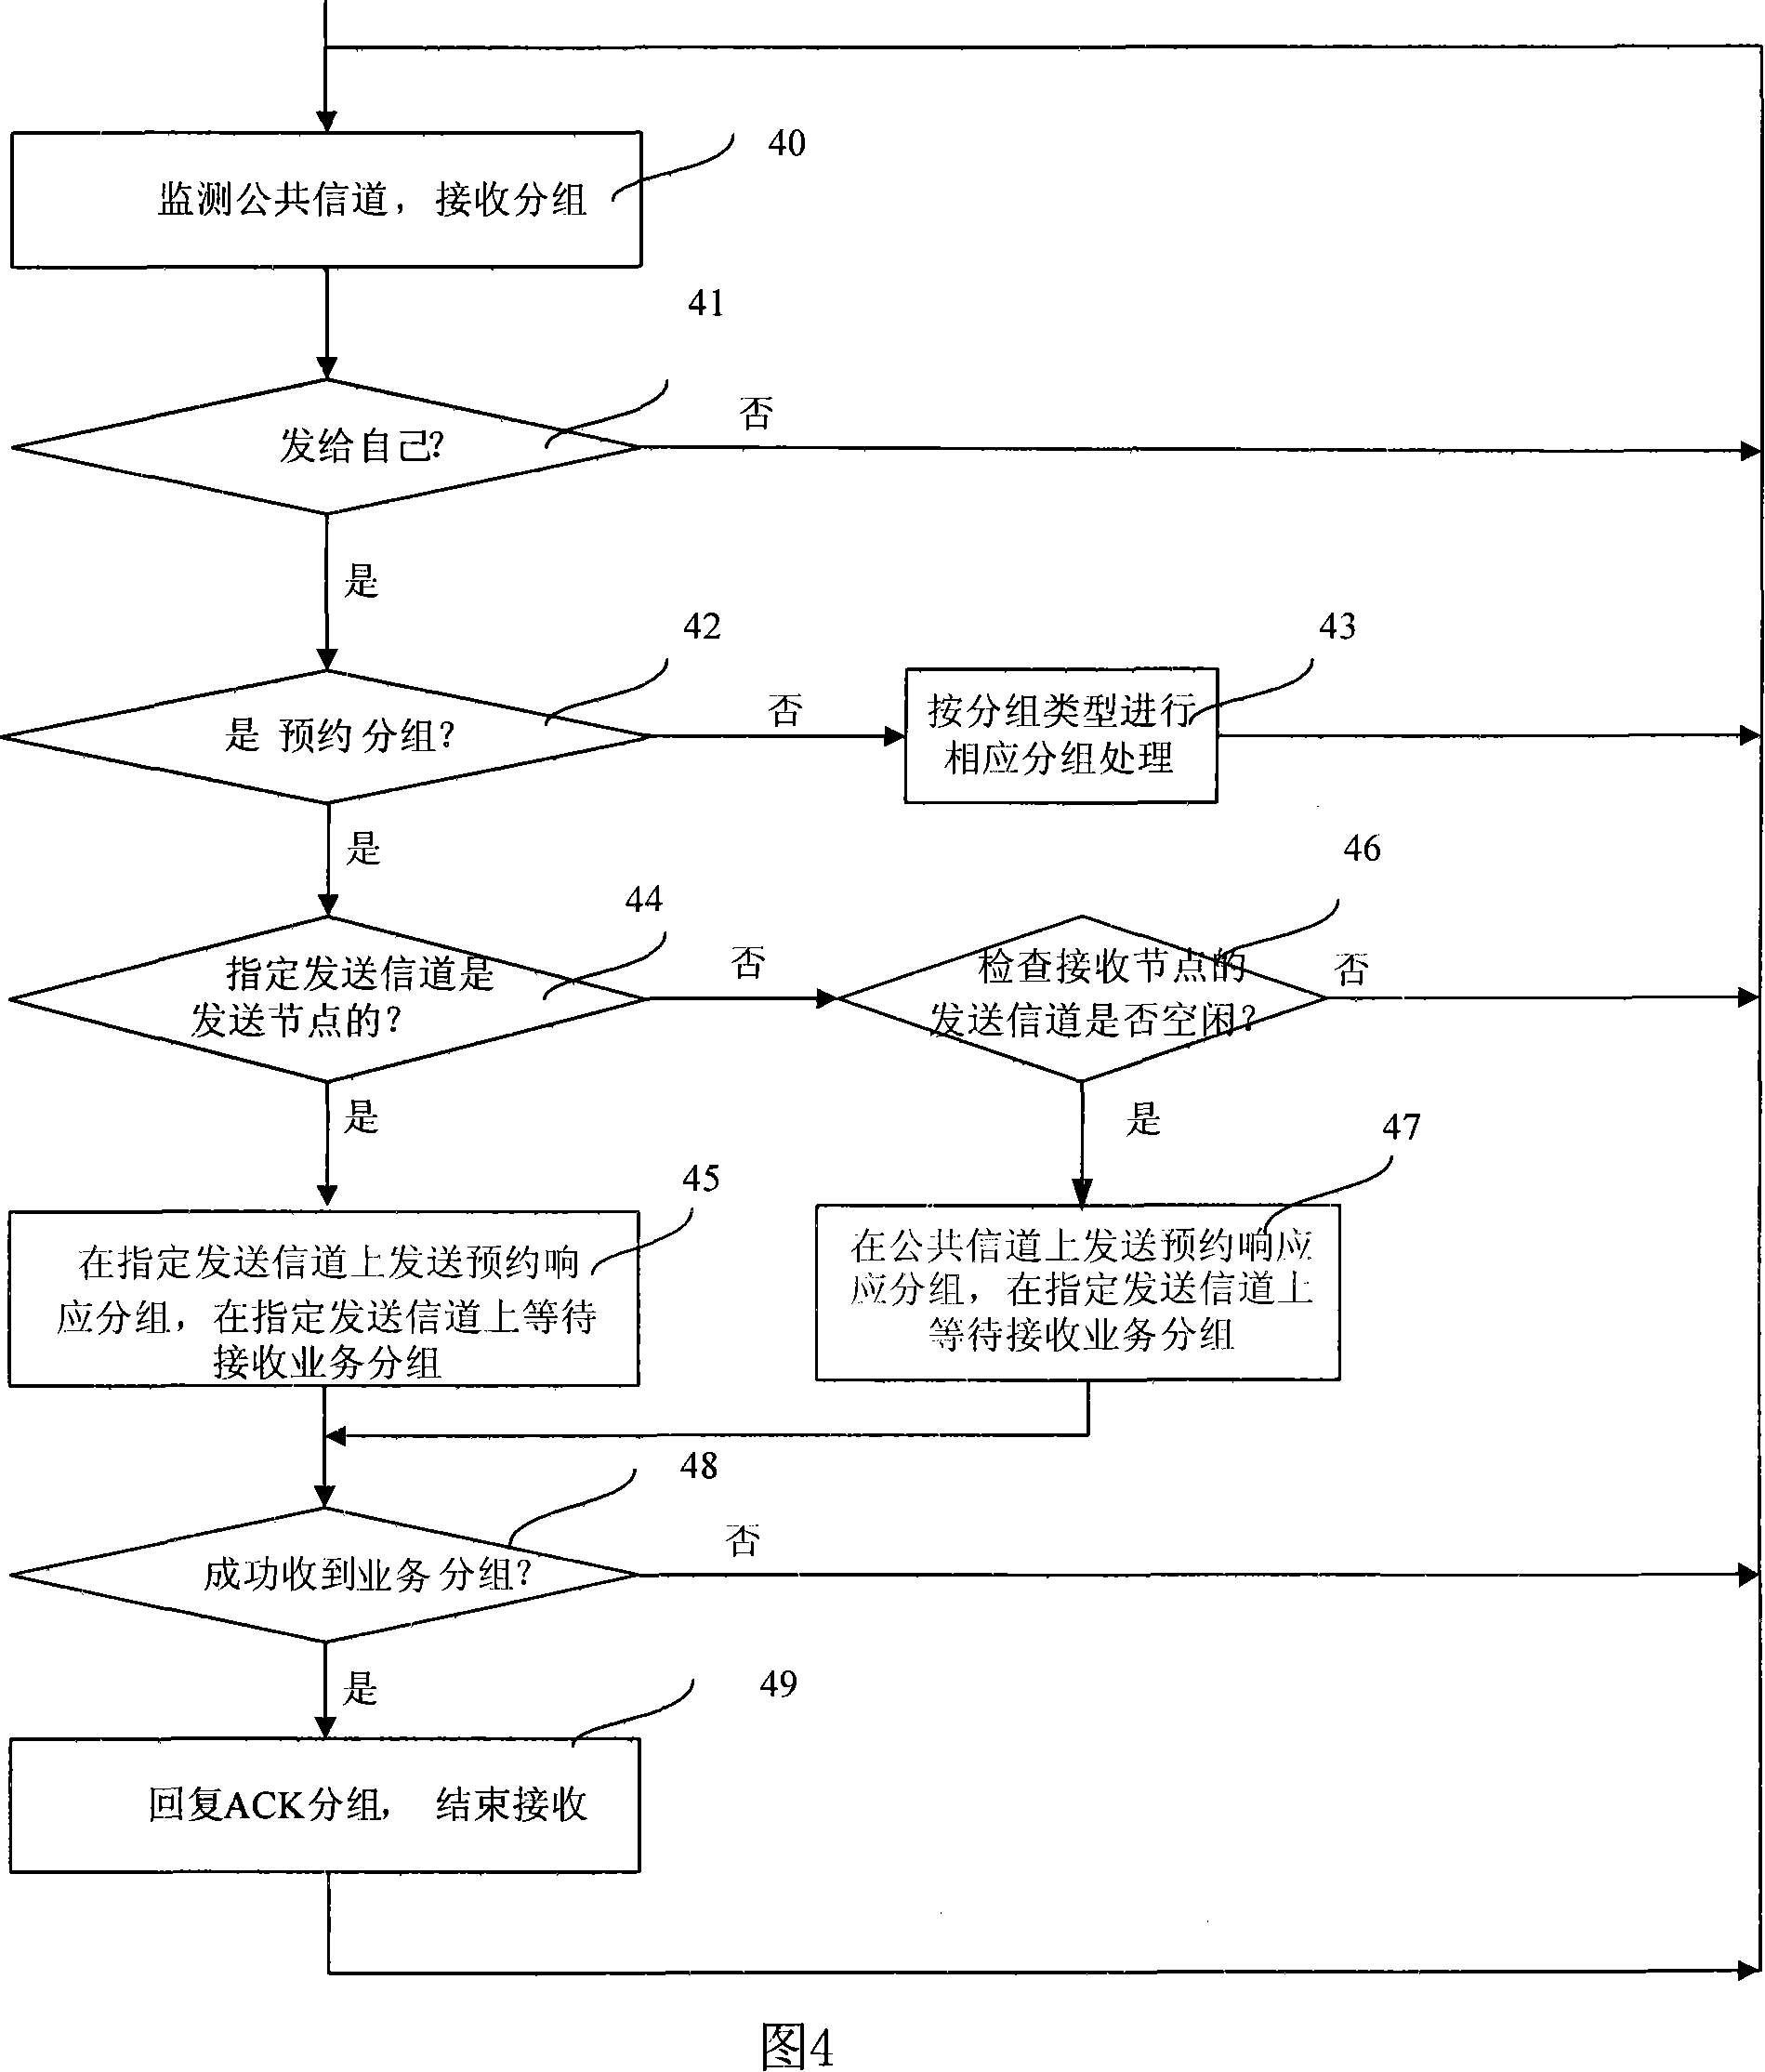 Multi-channel multi-address access method